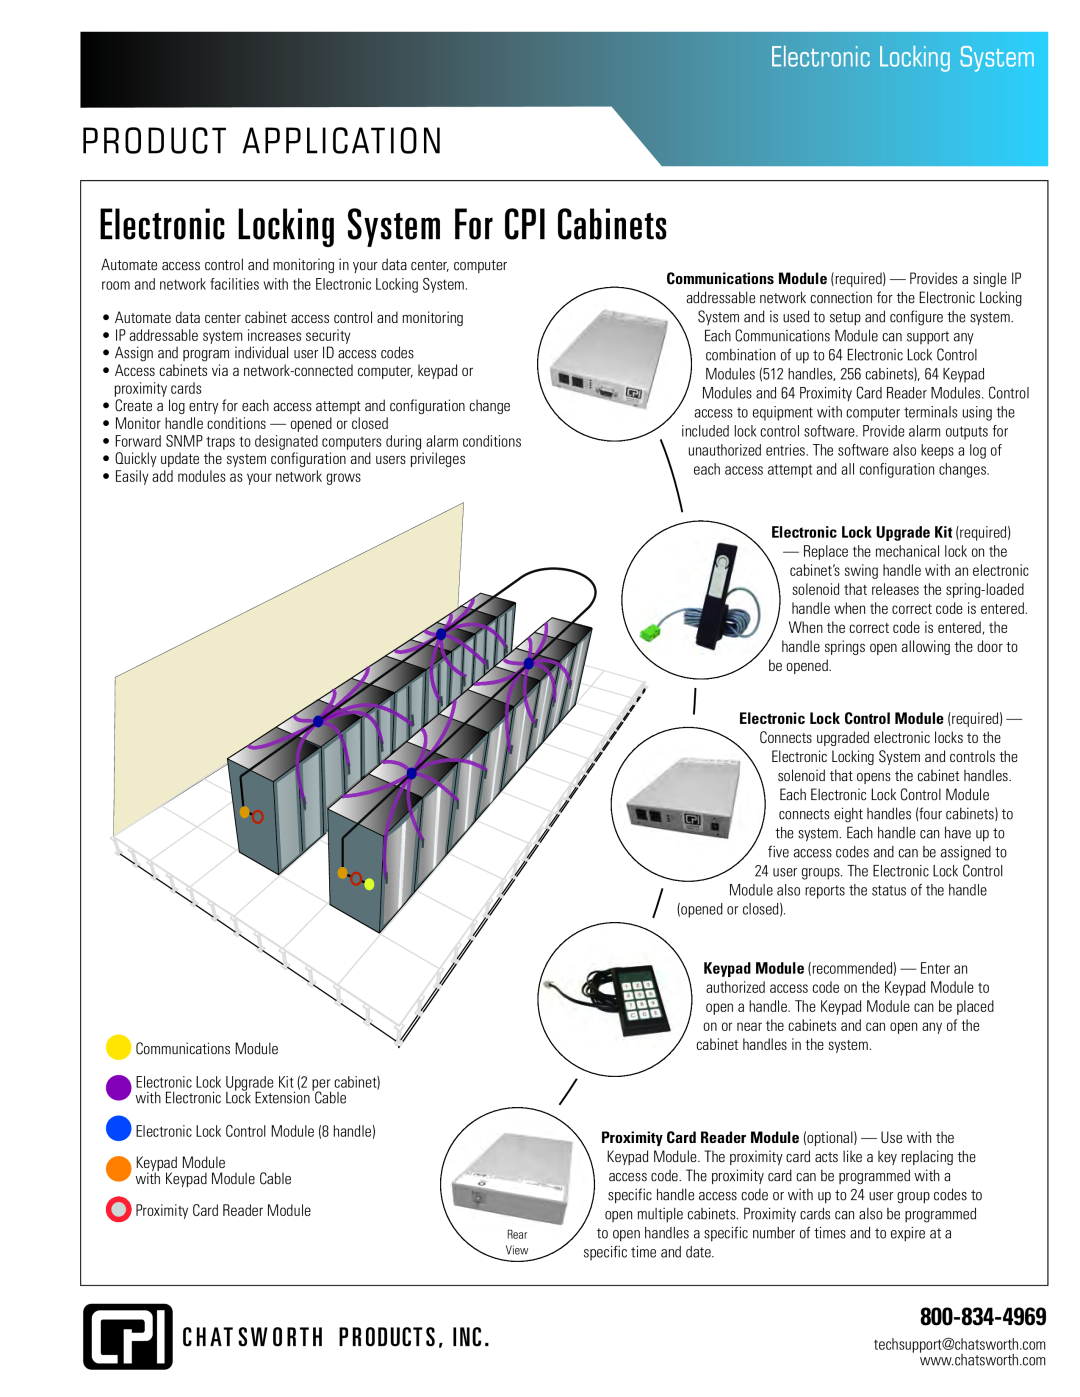 Chatsworth Products 16147-061 manual Electronic Locking System For CPI Cabinets, P R O D U C T A P P L I C At I O N 